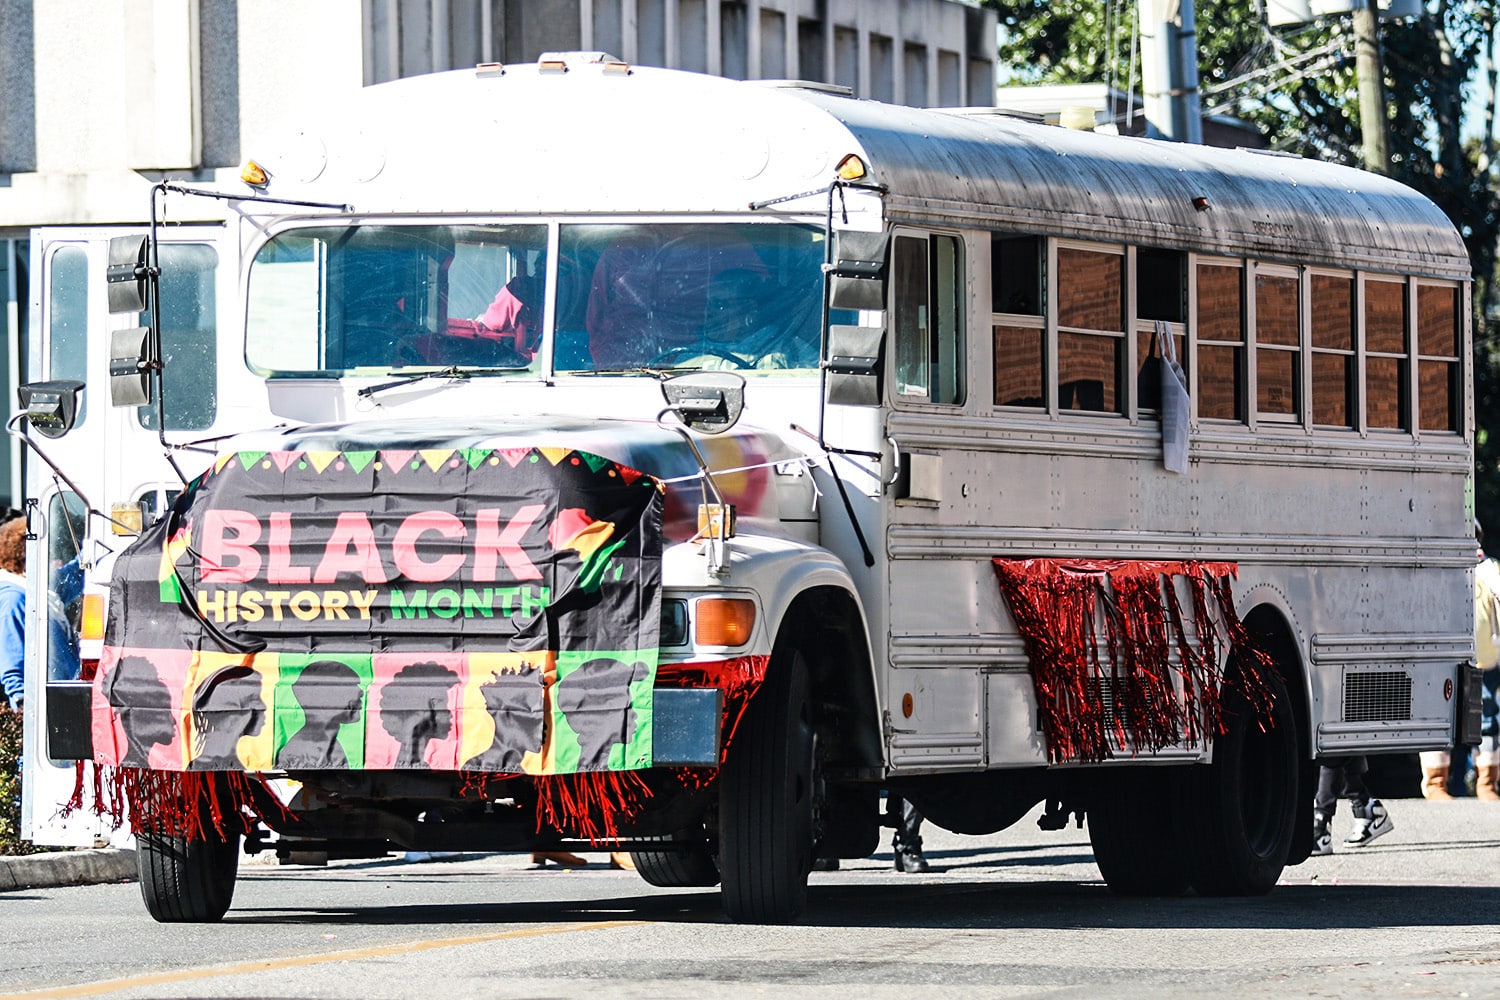 Black History Month Bus. Photo by Cheryl Clanton